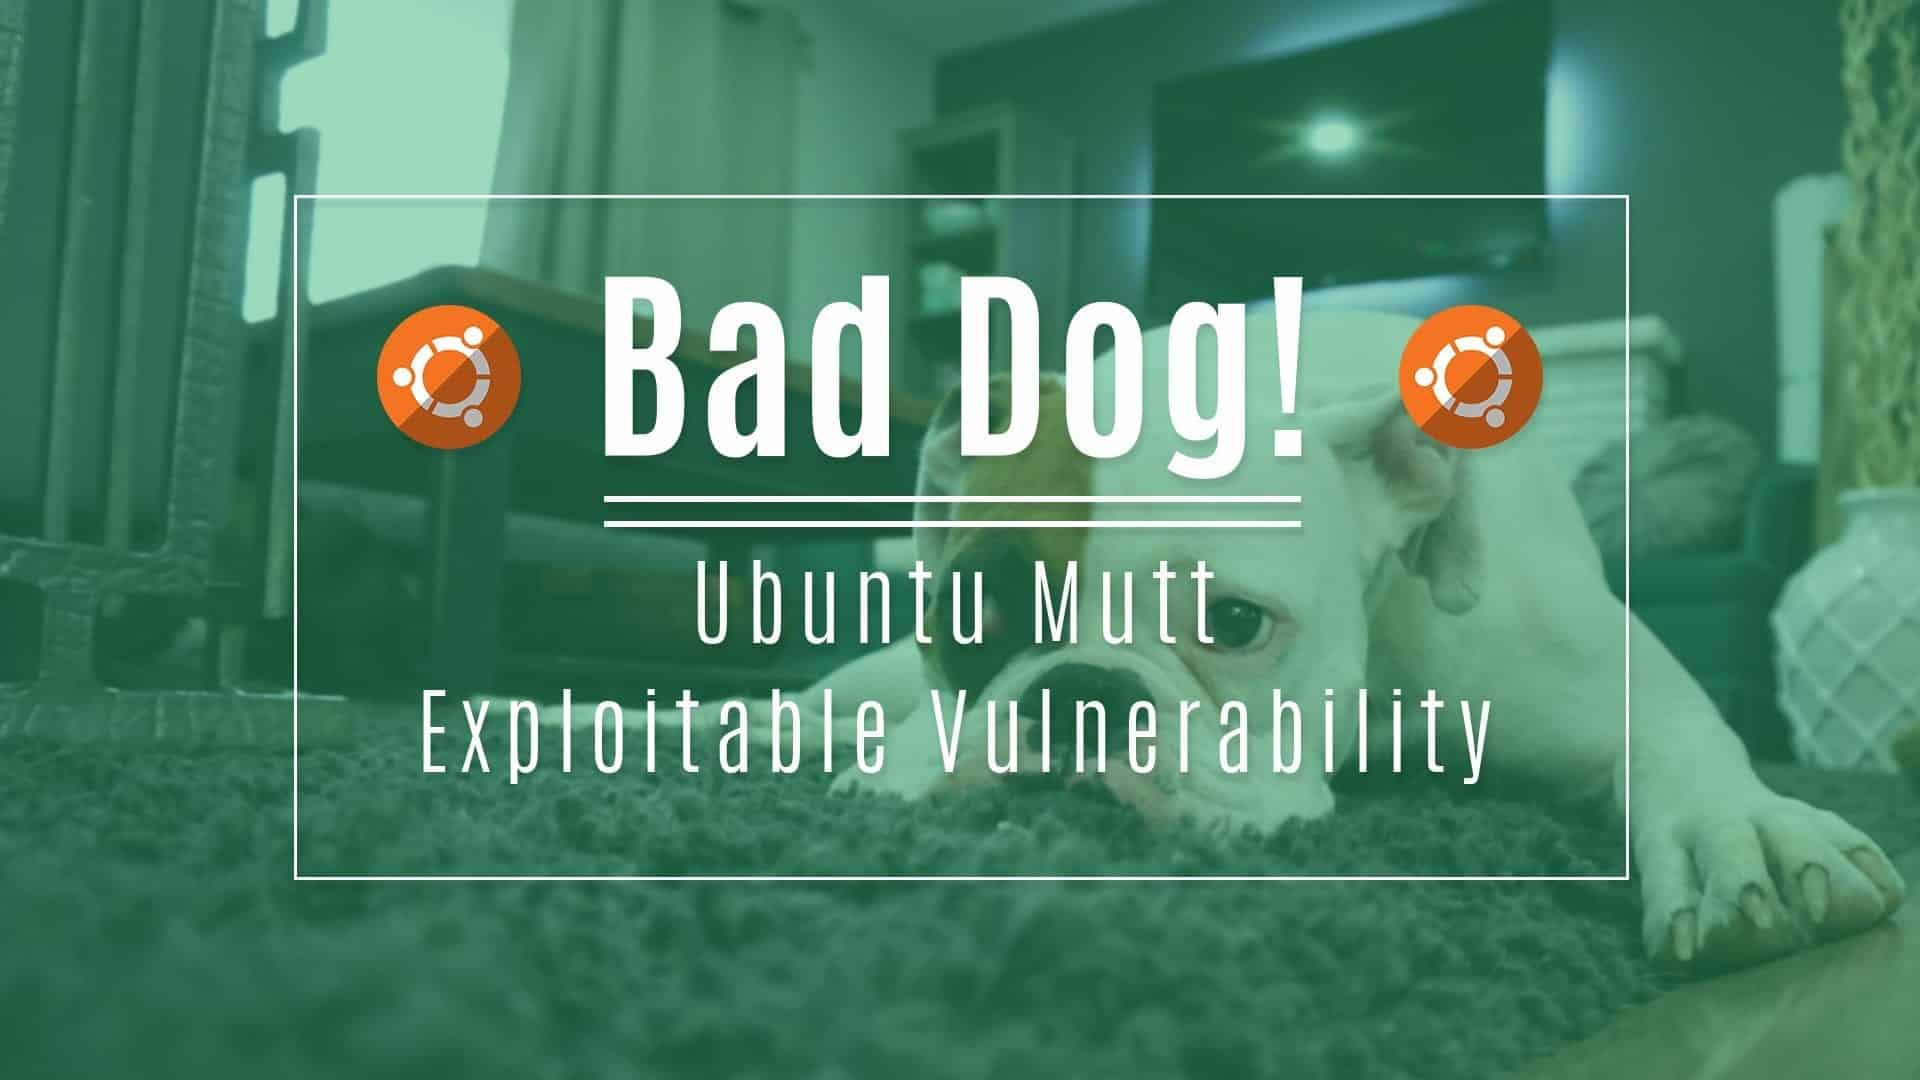 Bad Dog! Ubuntu Mutt Exploitable Vulnerability